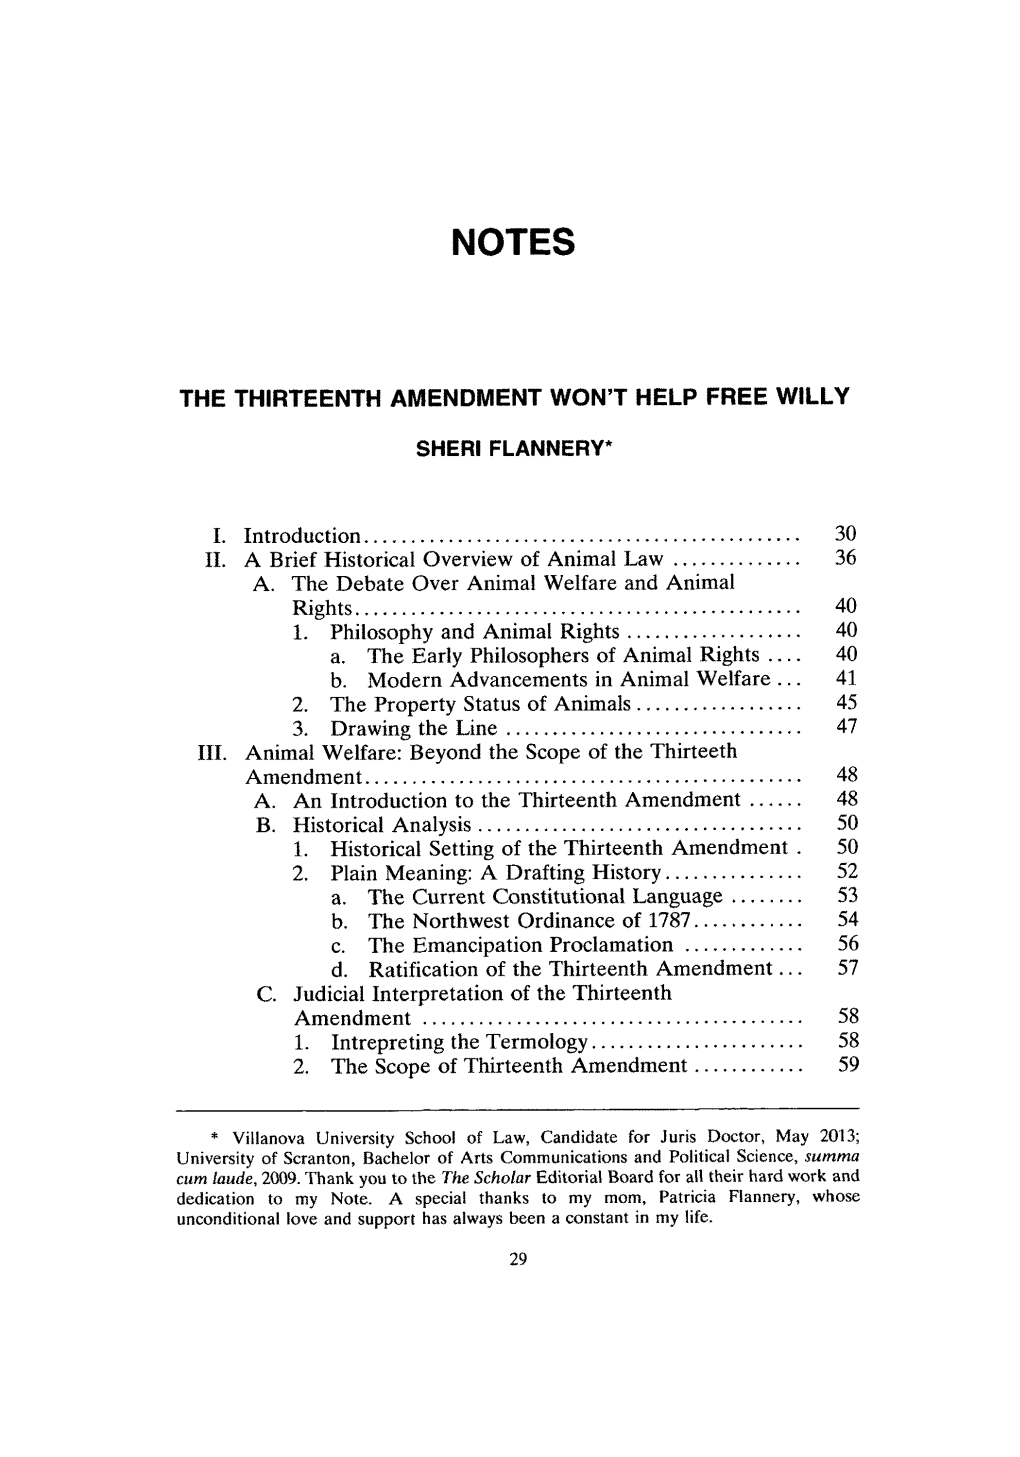 Thirteenth Amendment Won't Help Free Willy